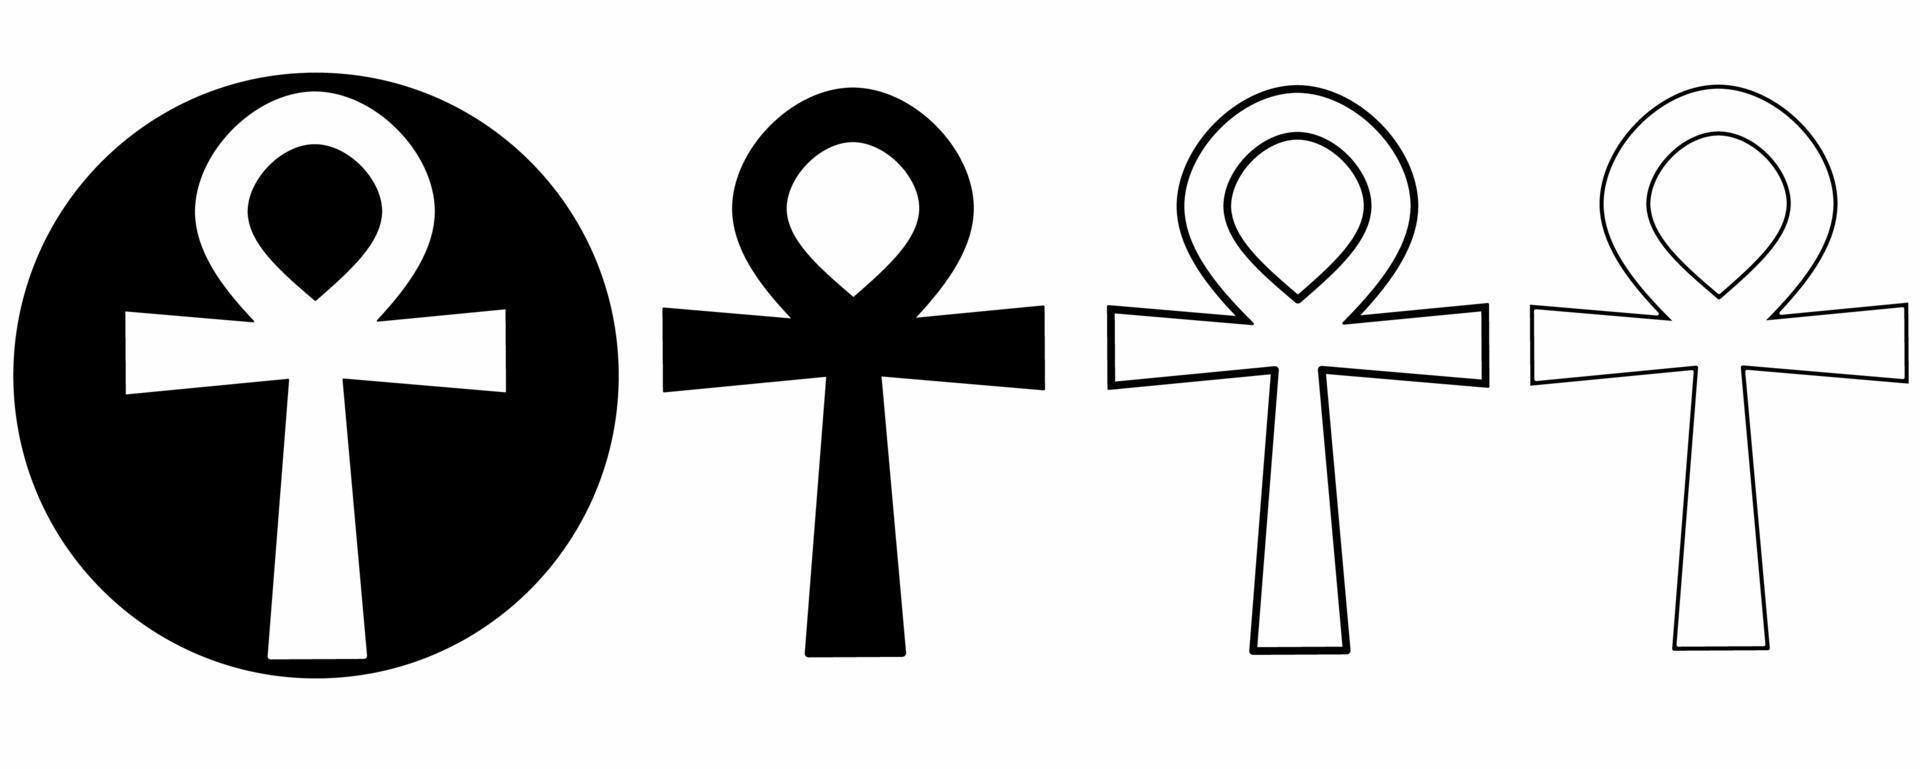 conjunto de signos de ankh dibujado a mano aislado sobre fondo blanco.vector de símbolo de ankh de dibujo a mano vector